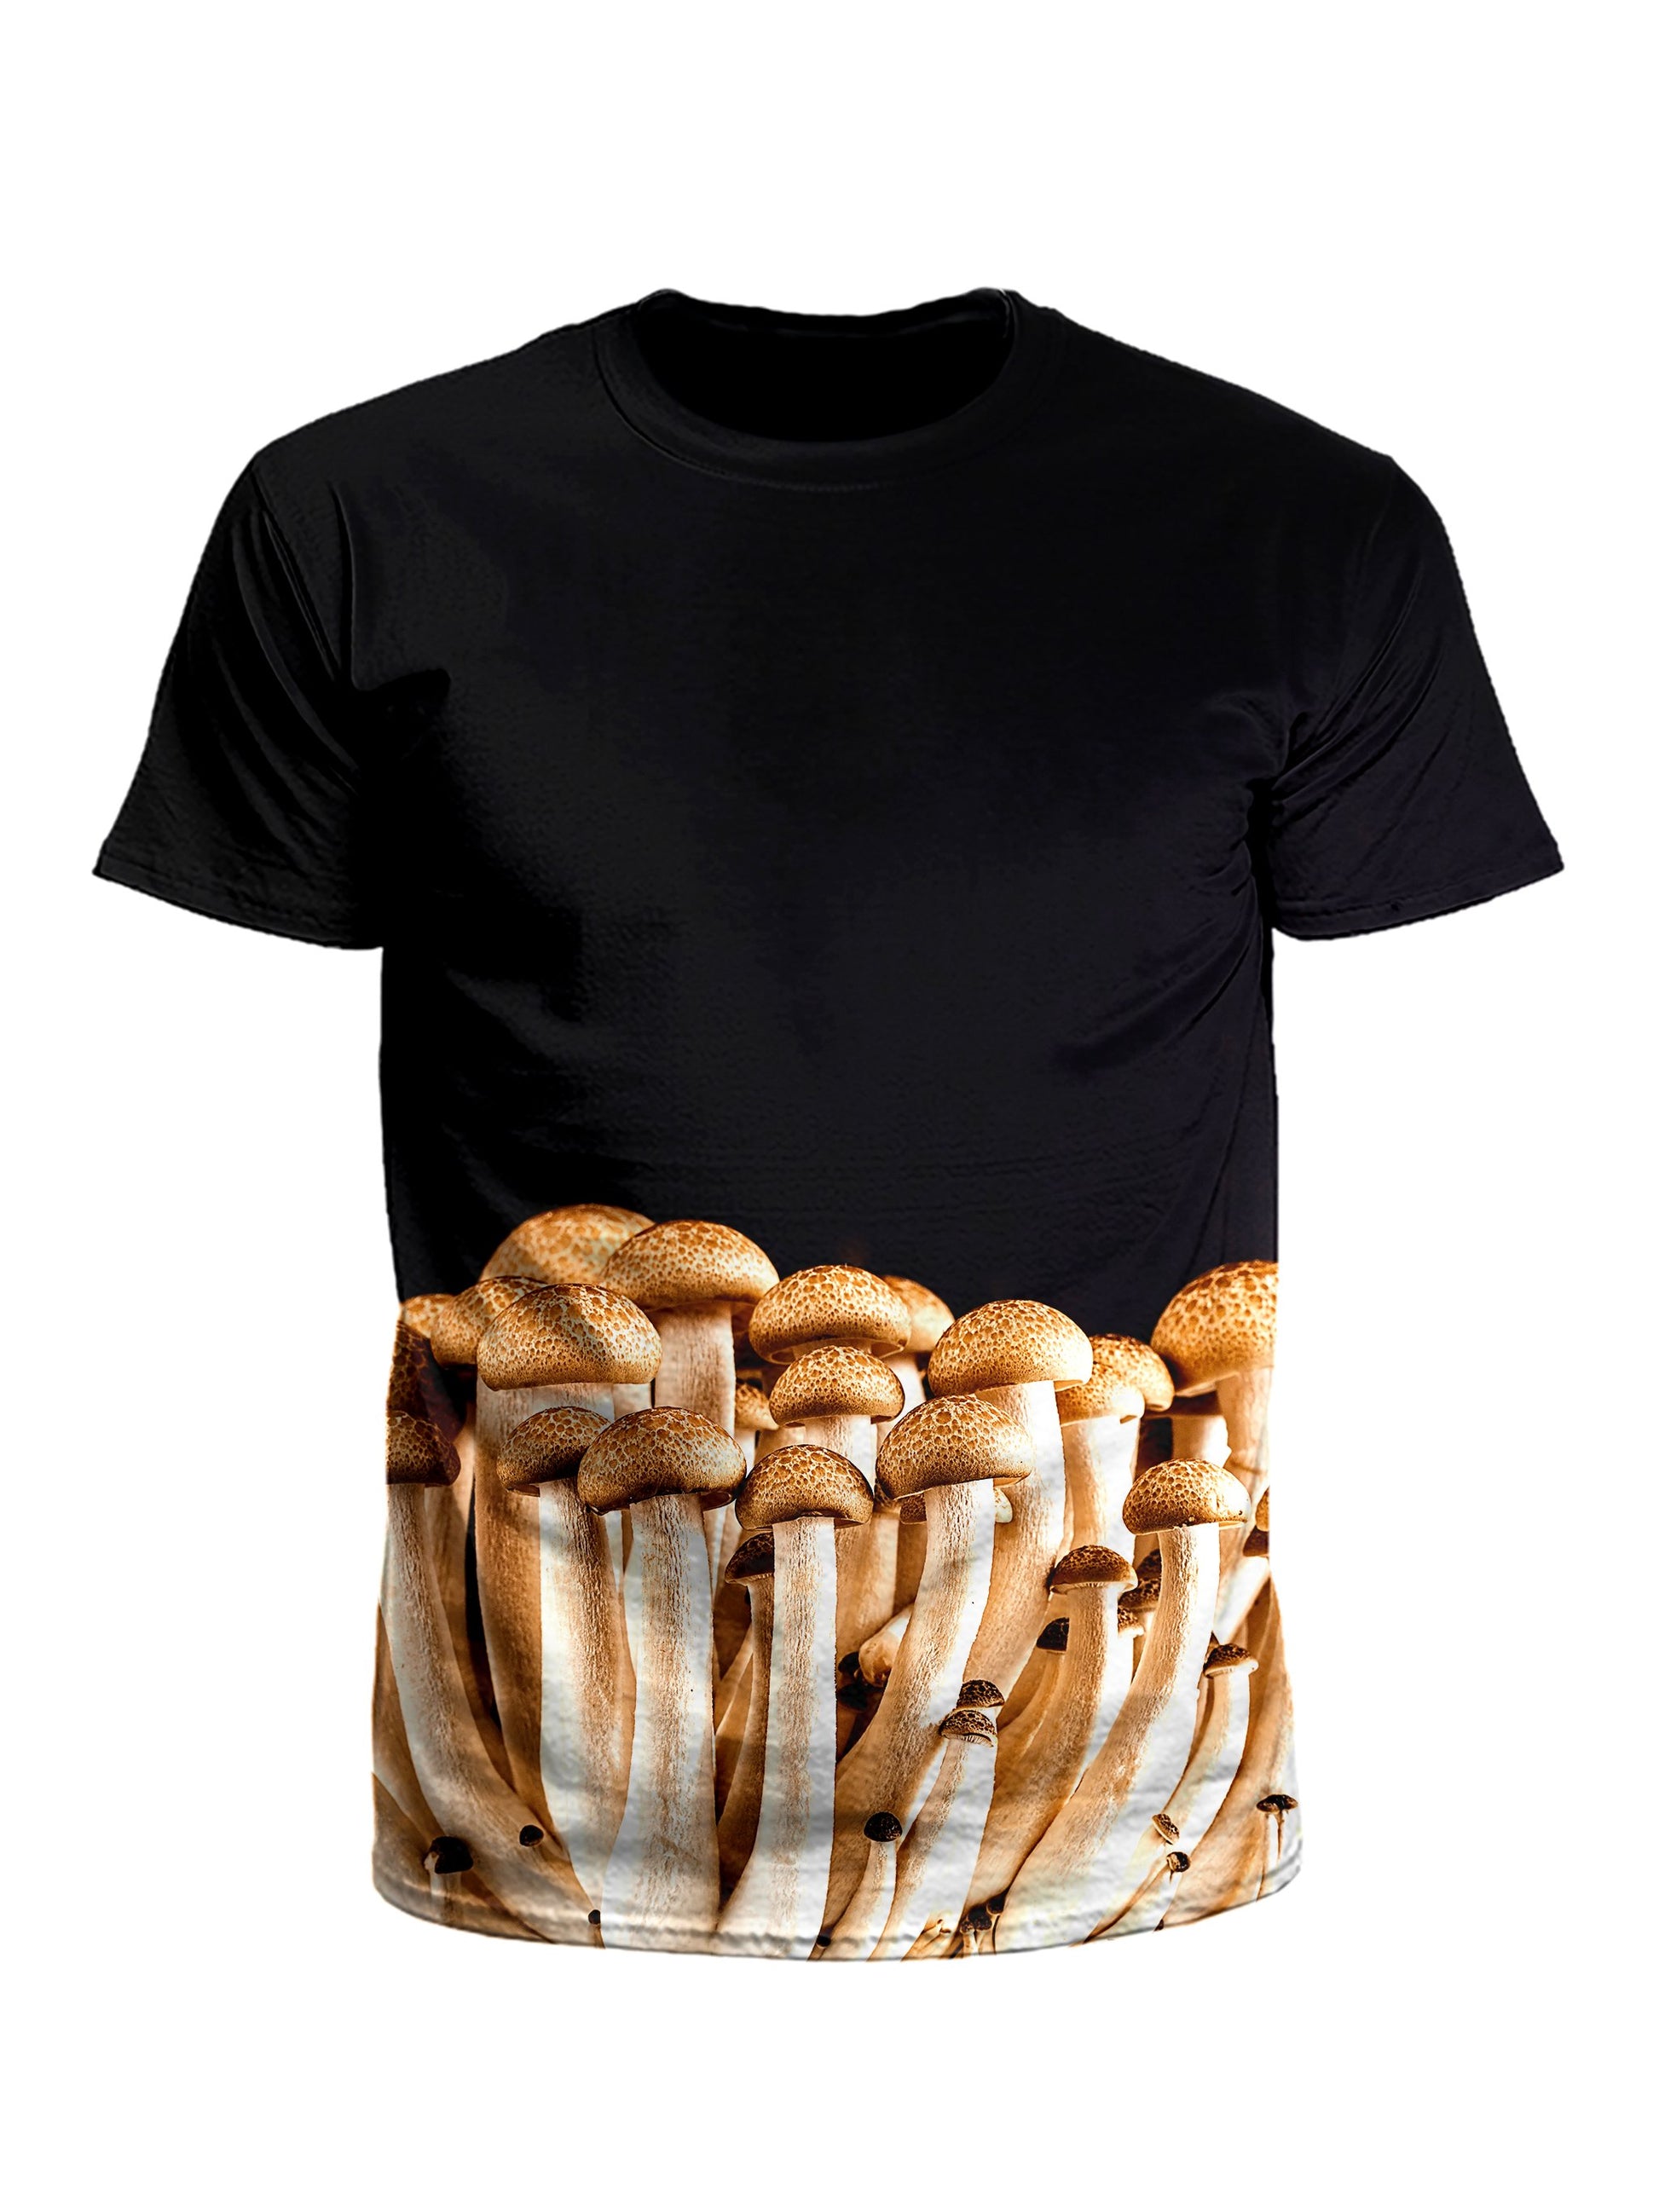 Men's black & brown mushroom unisex t-shirt front view.